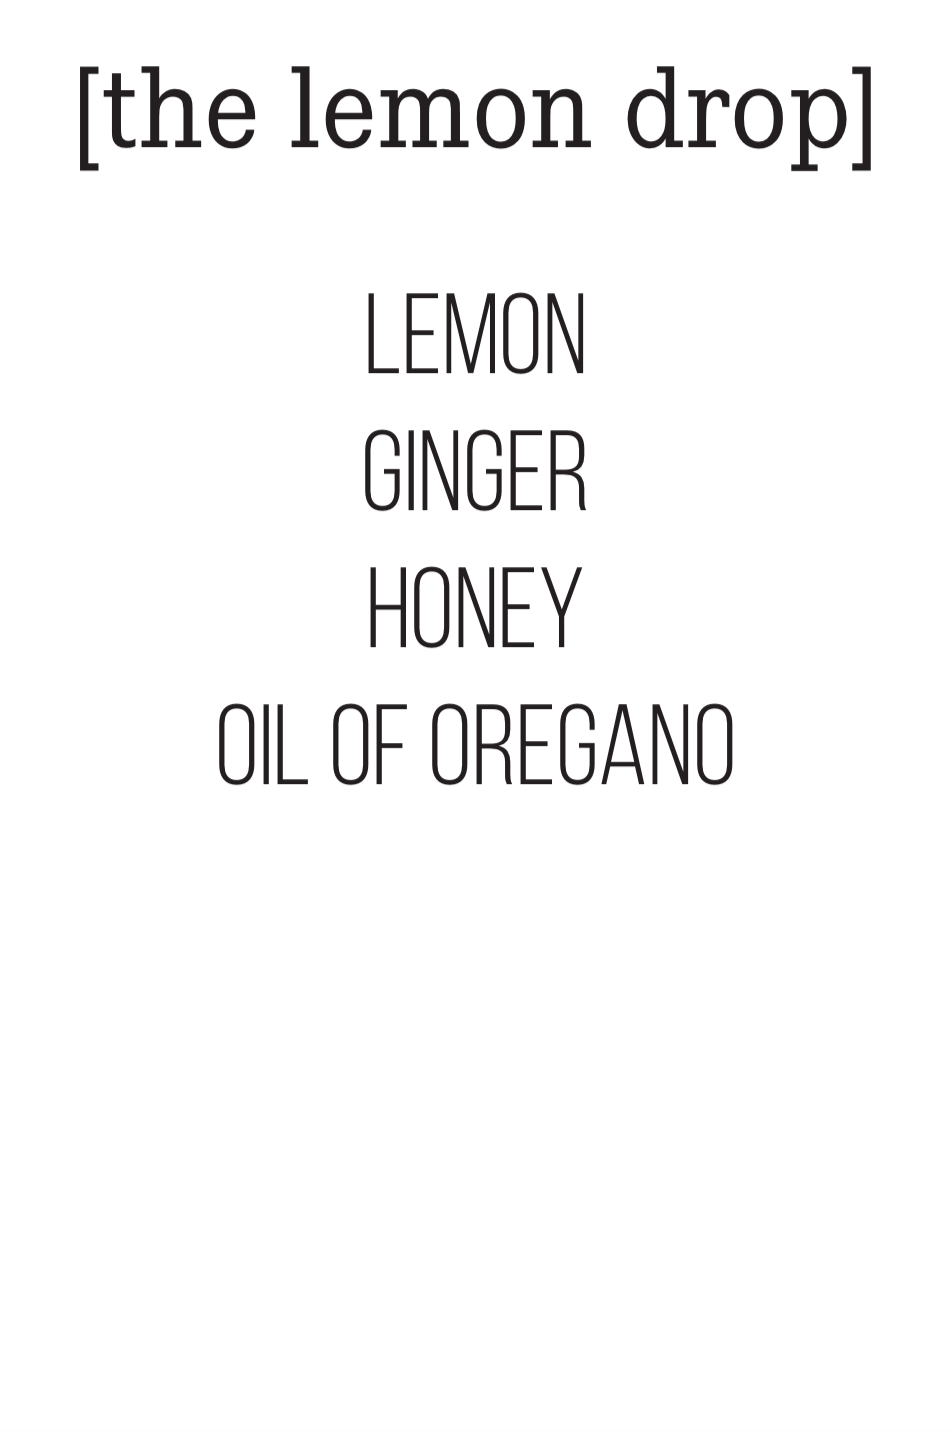 stoke cold pressed juice - organic shots - the lemon drop